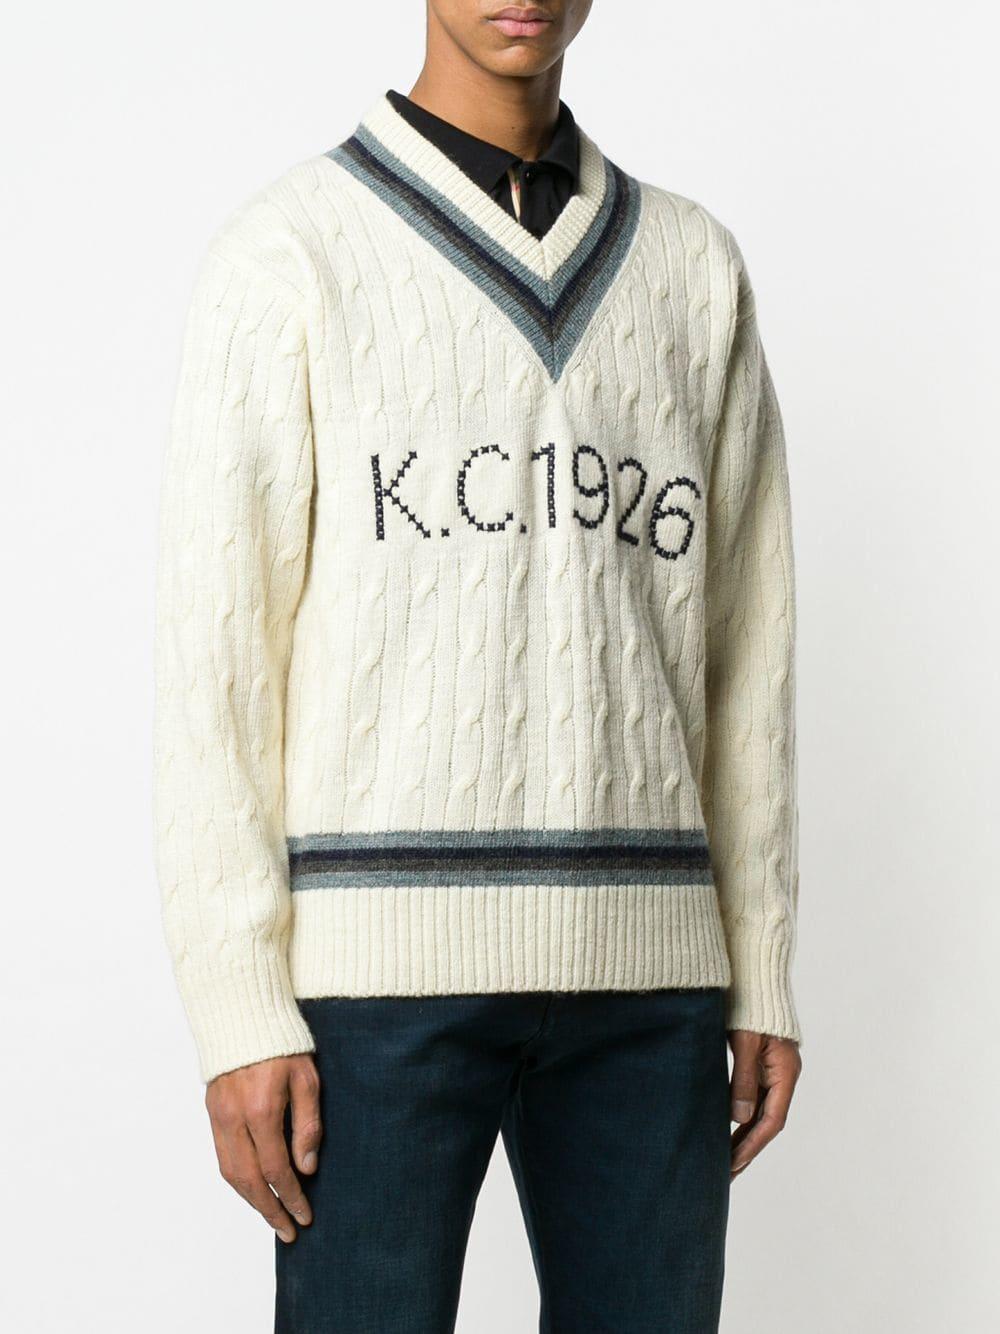 Kent & Curwen Wool Cross Stitch Cricket Sweater for Men - Lyst